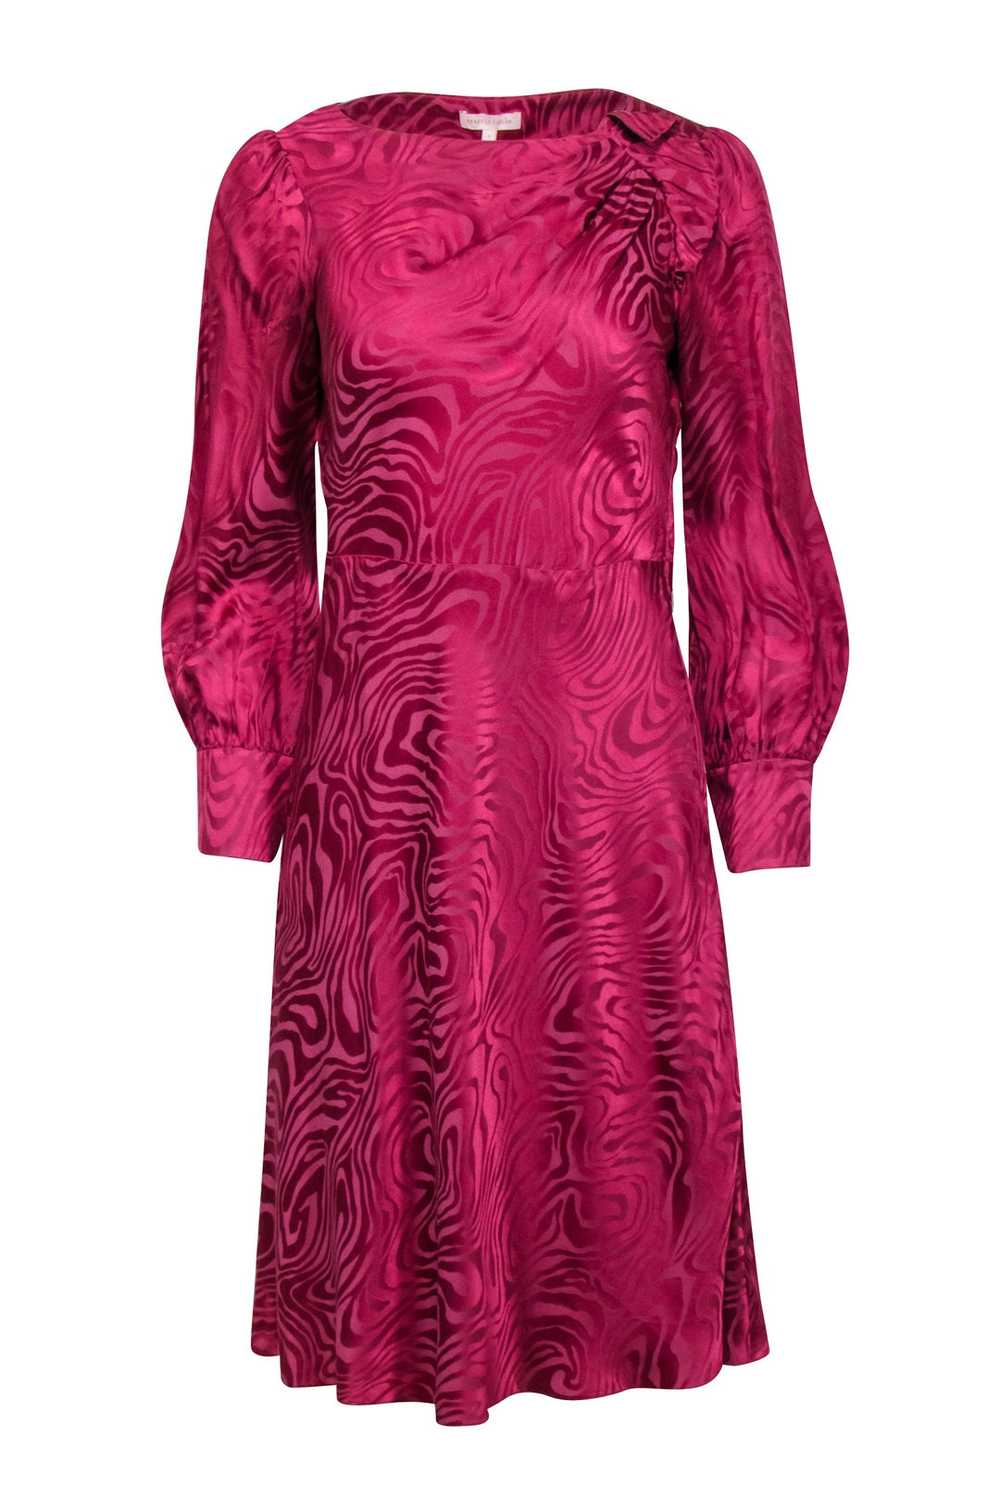 Rebecca Taylor - Pink Swirl Print Silk Blend A-Li… - image 1